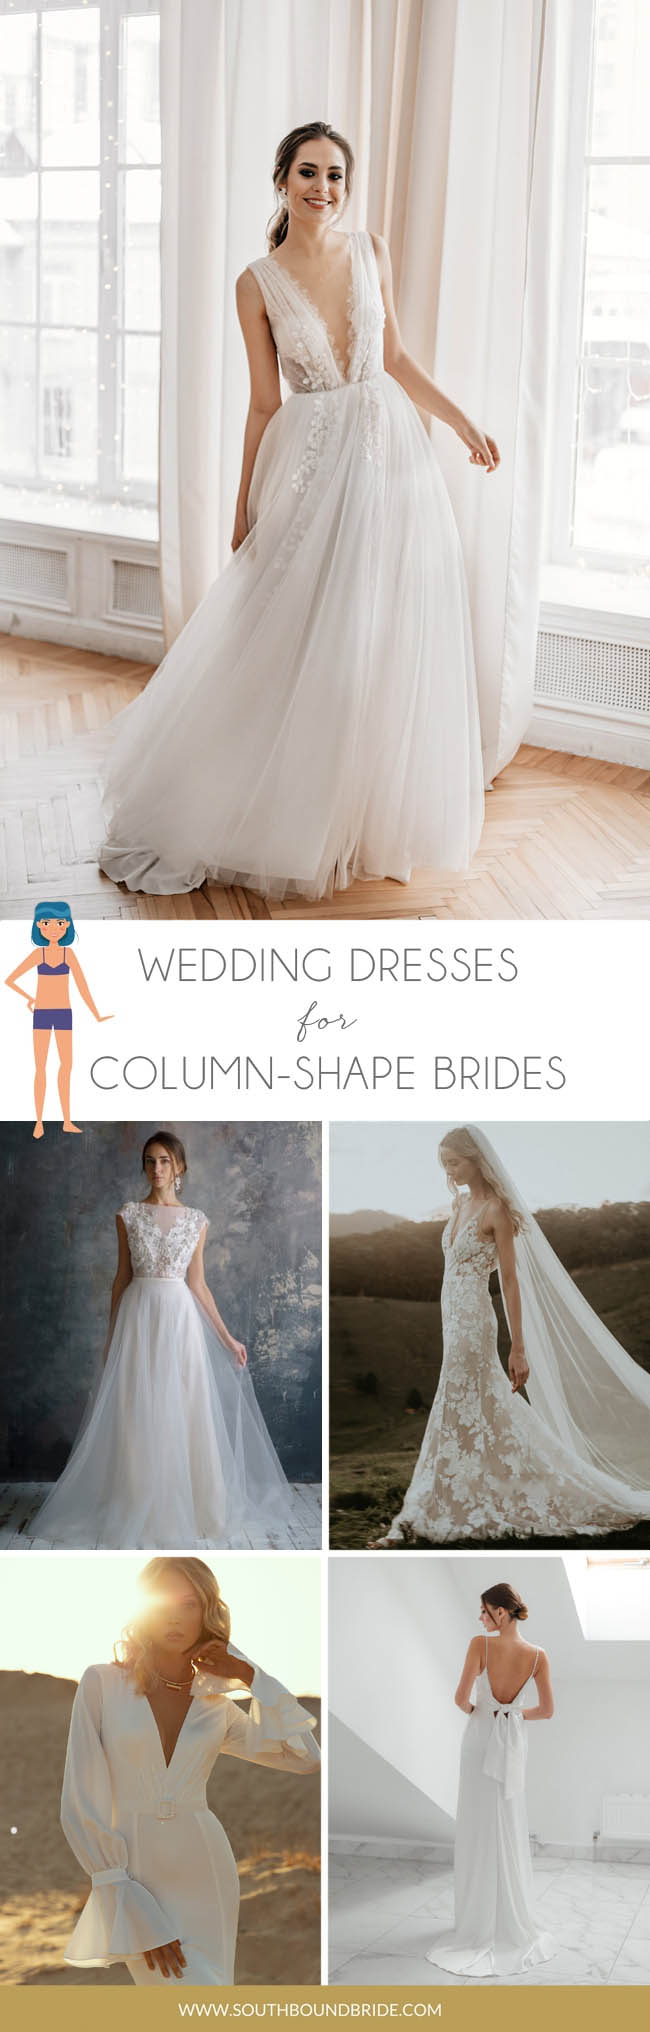 Wedding Dresses for Banana/Column/Tube Shaped Brides